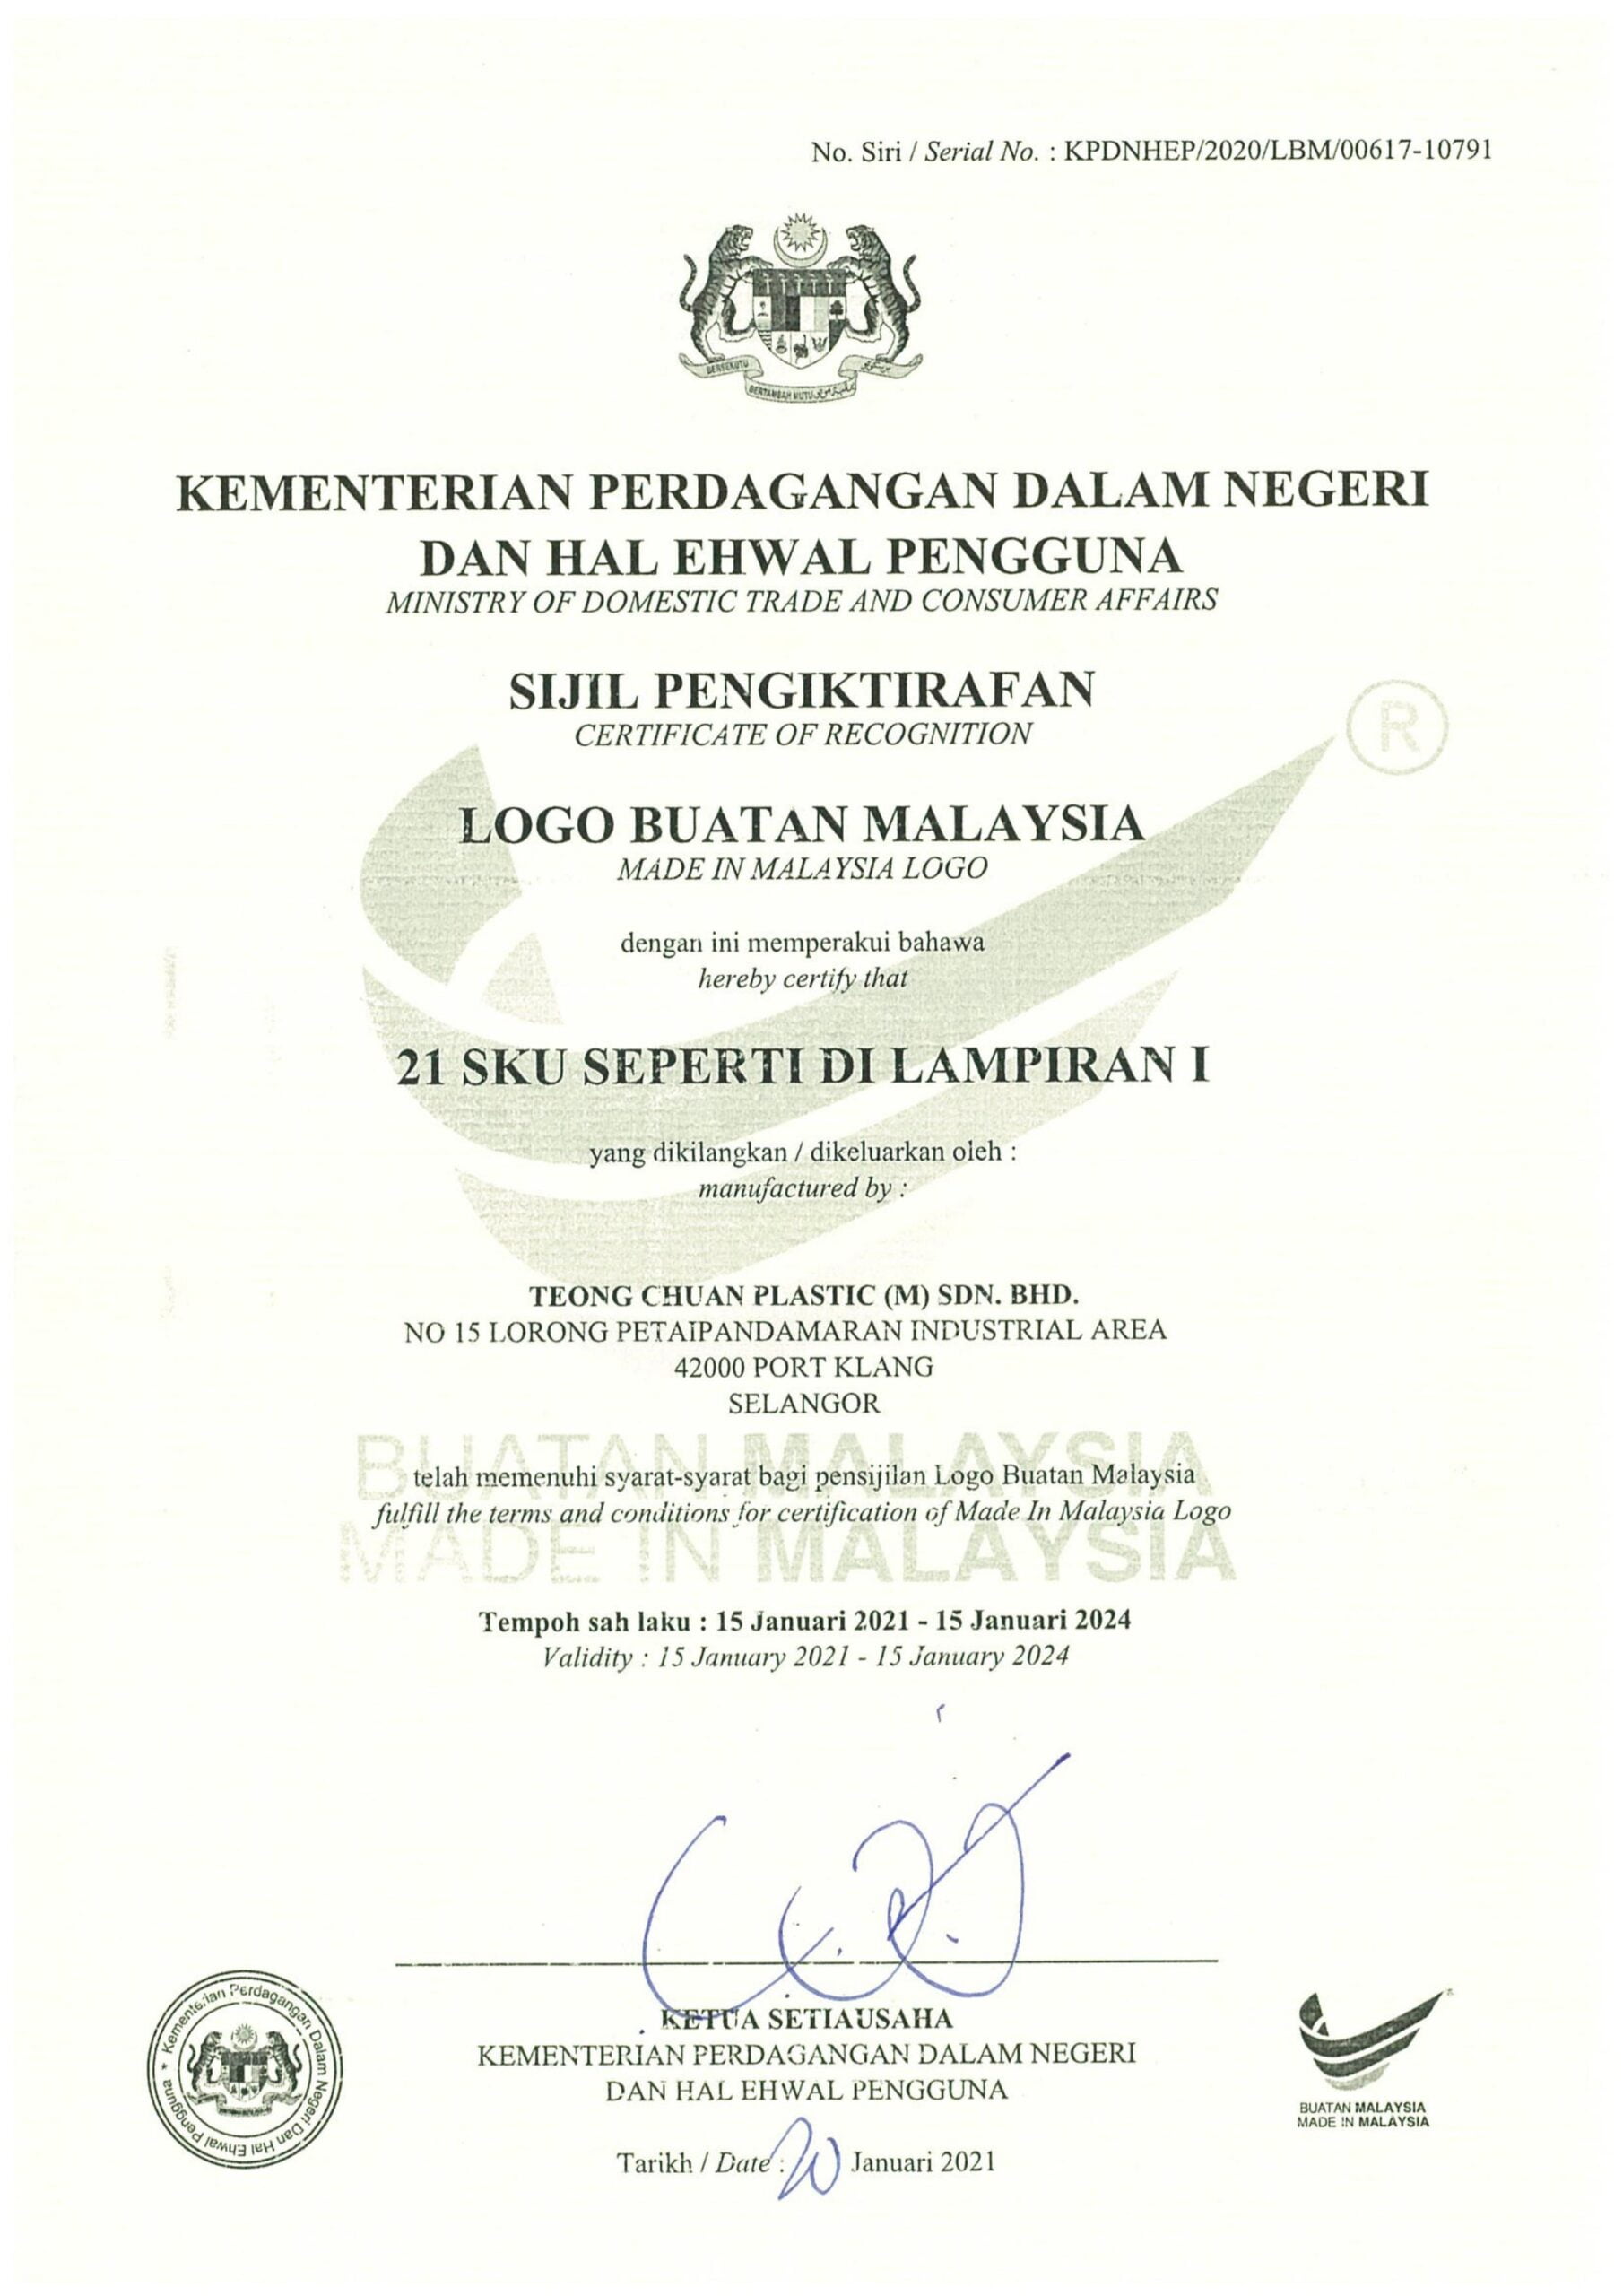 Made in Malaysia logo certificate